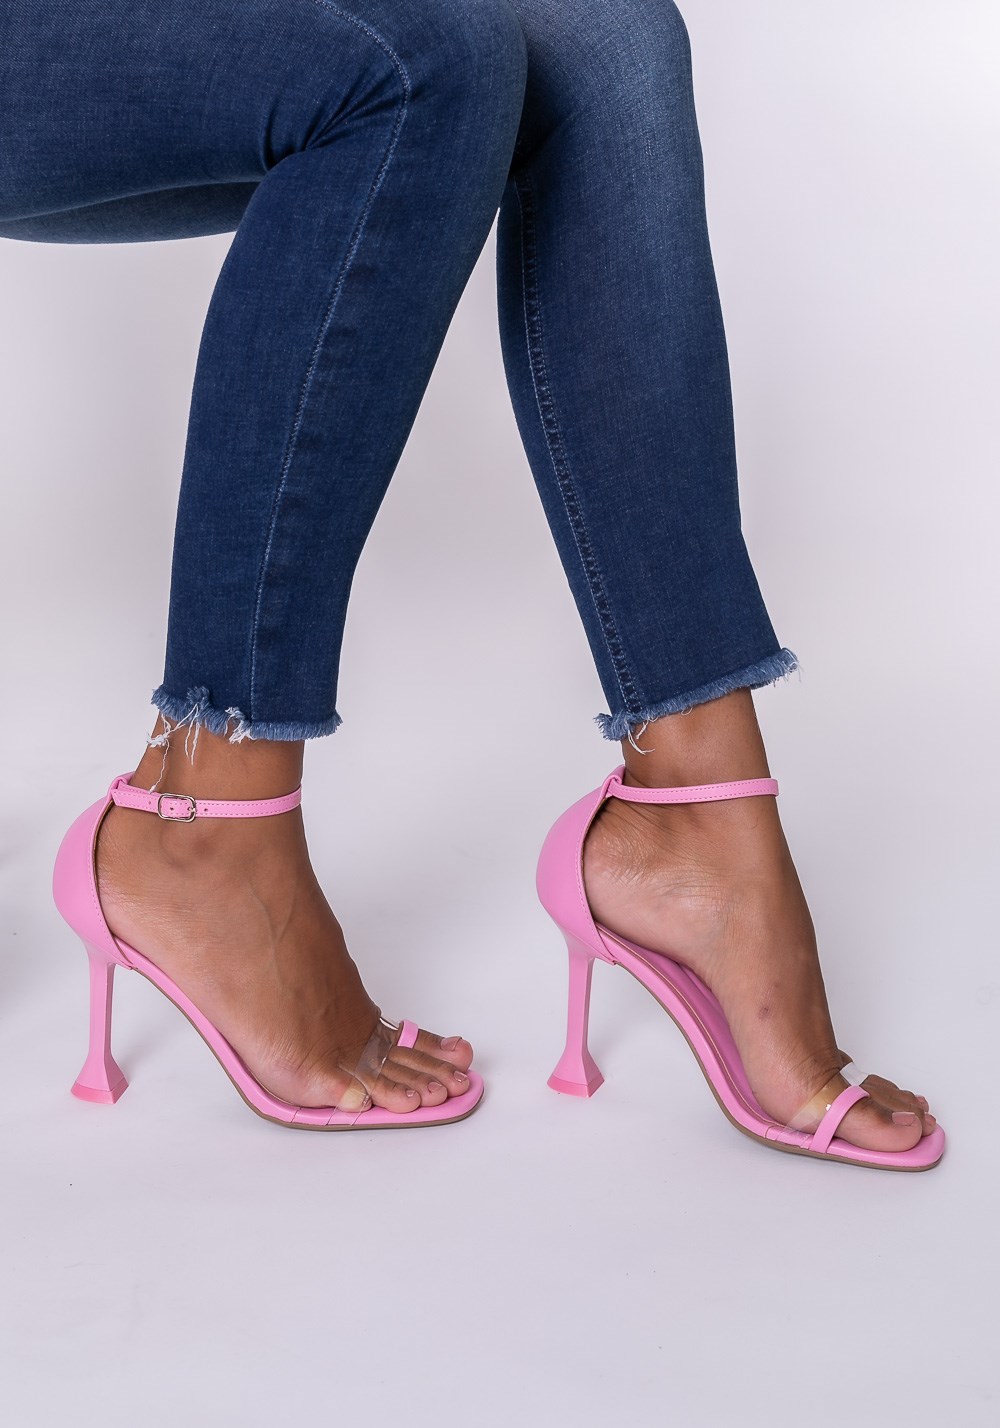 Sandália salto taça shoes rosa